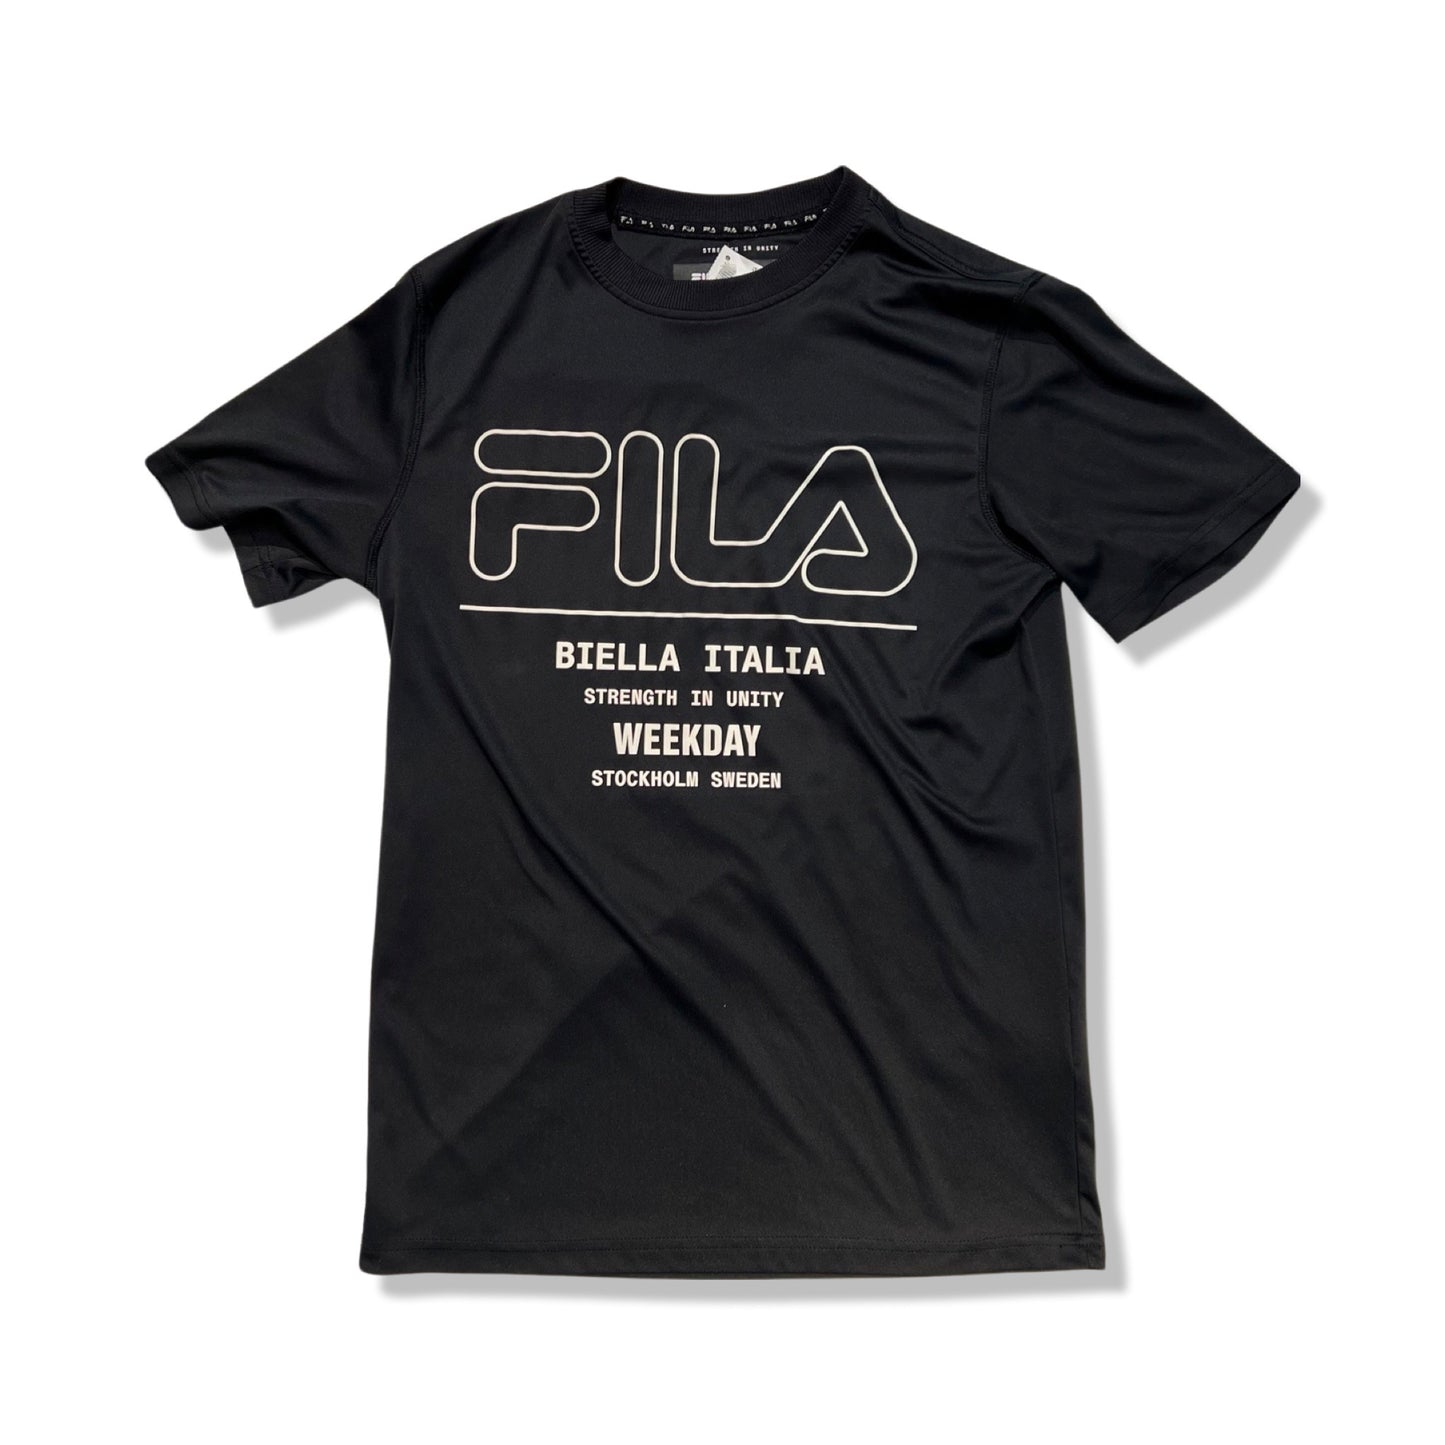 Tränings T-shirt Fila x Weekend Dam S